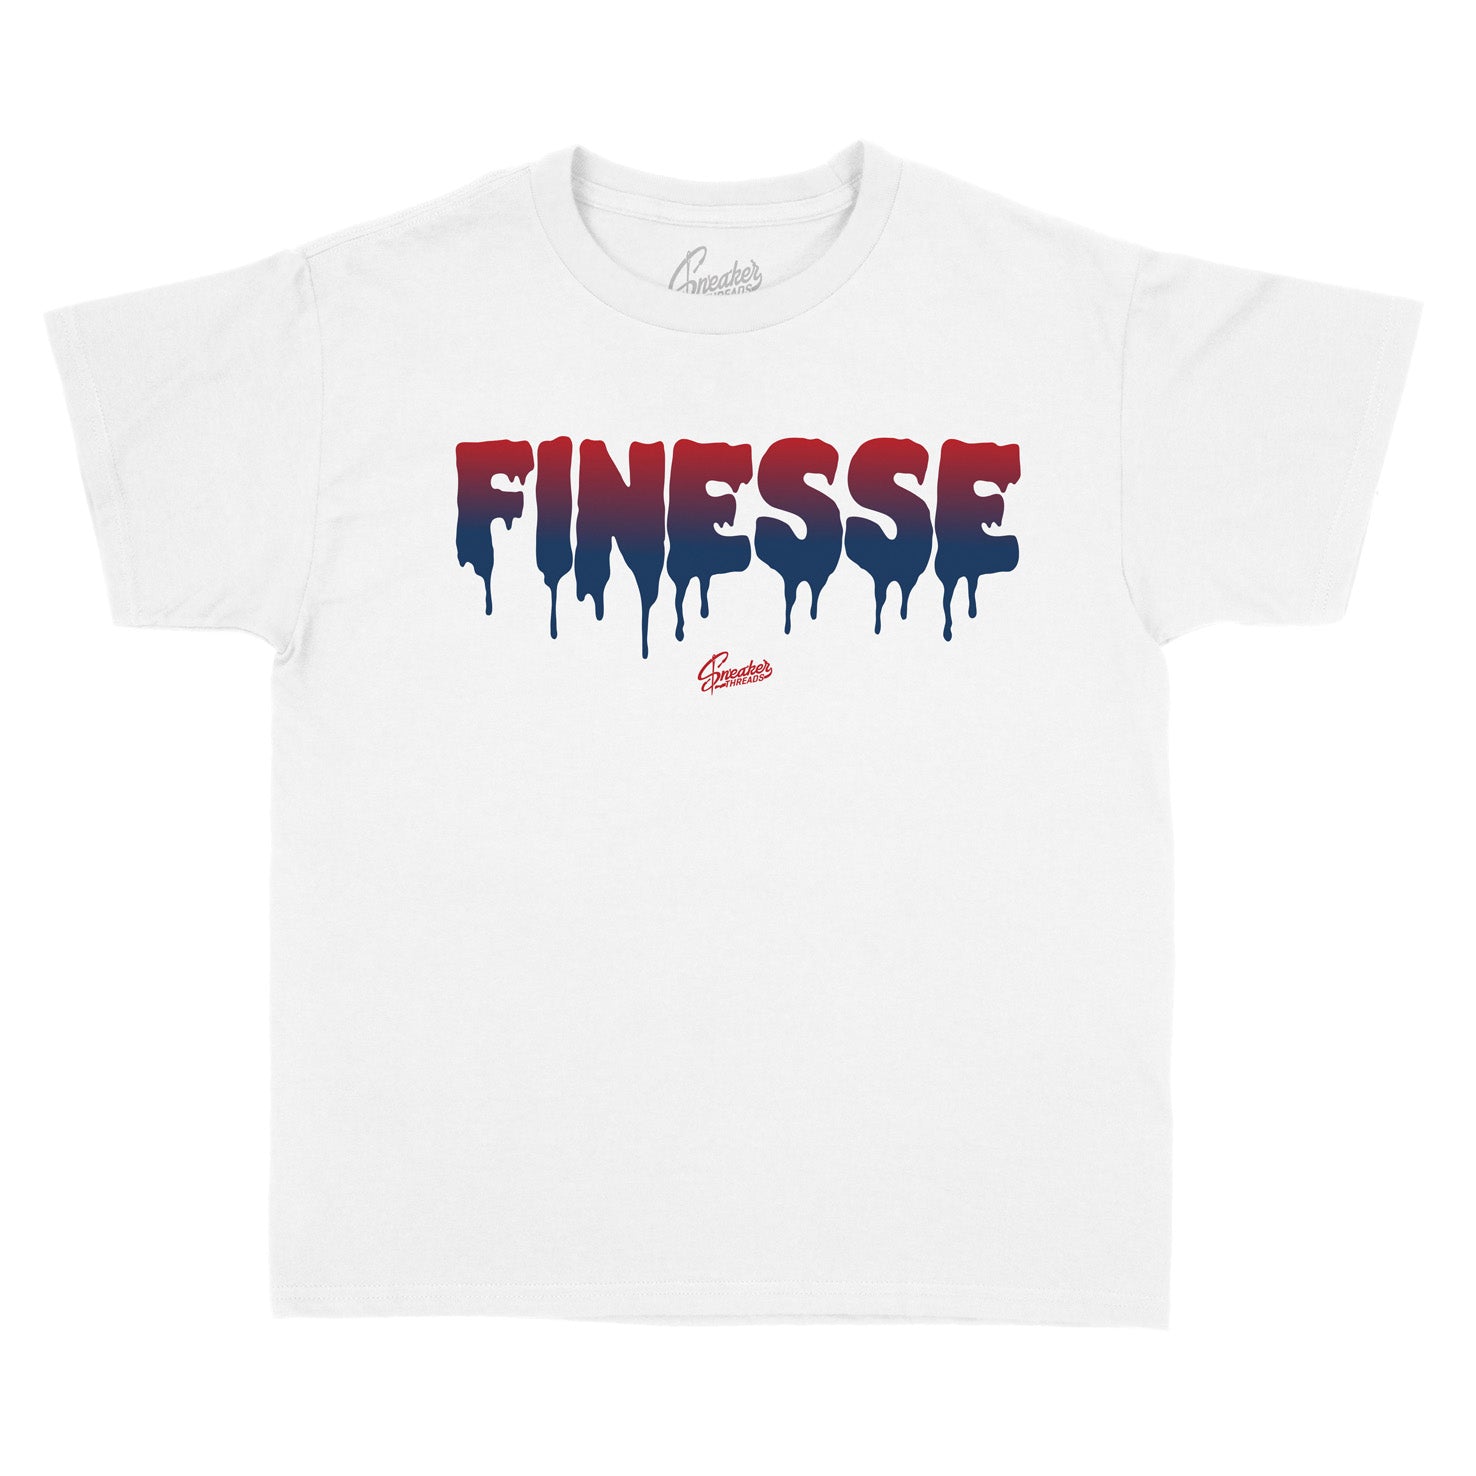 Kids Finesse shirt to wear with Retro Fiba 4's